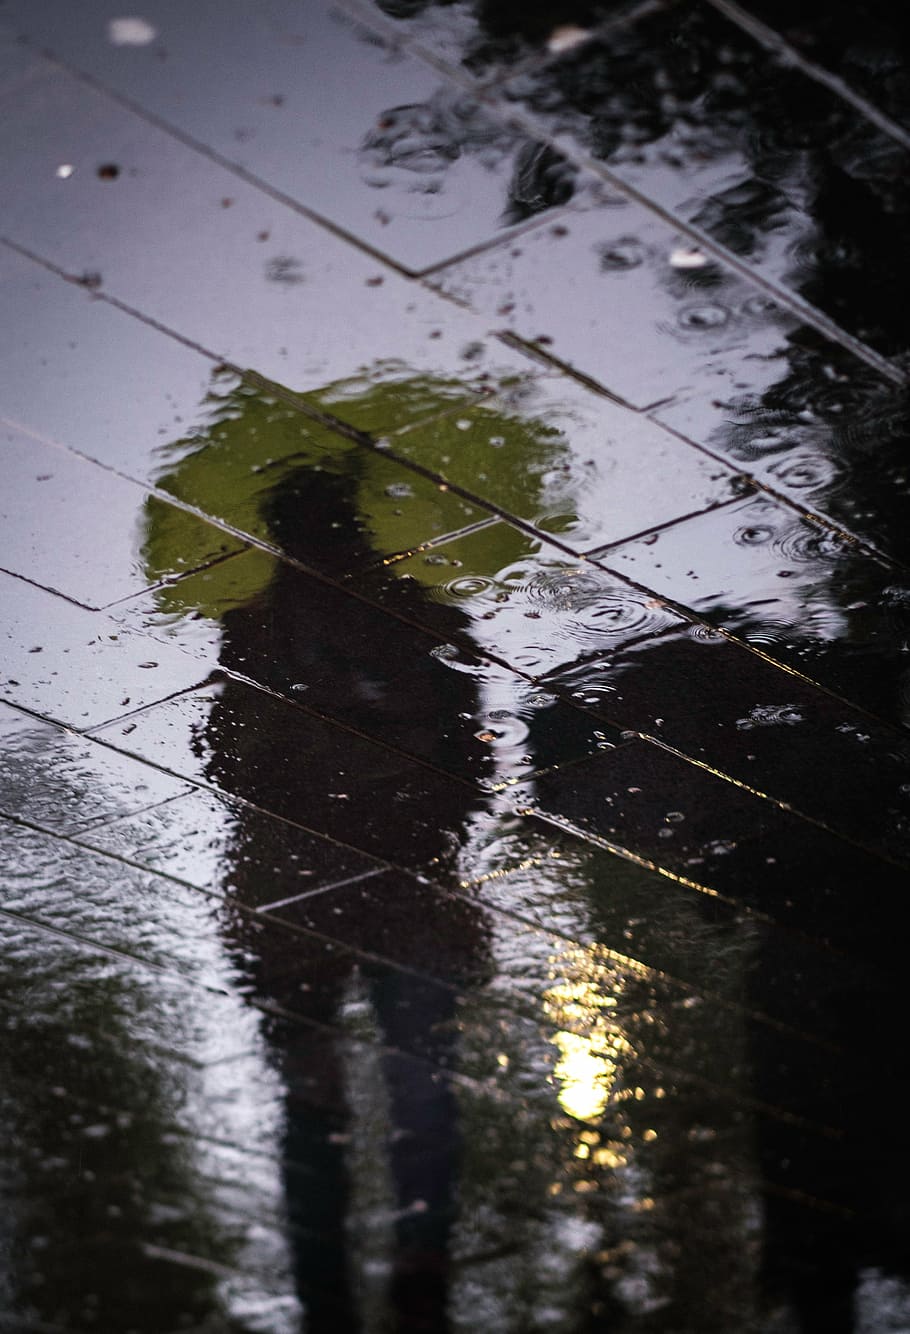 bayangan, orang, memegang, payung, jalan, basah, air, hujan, manusia, refleksi